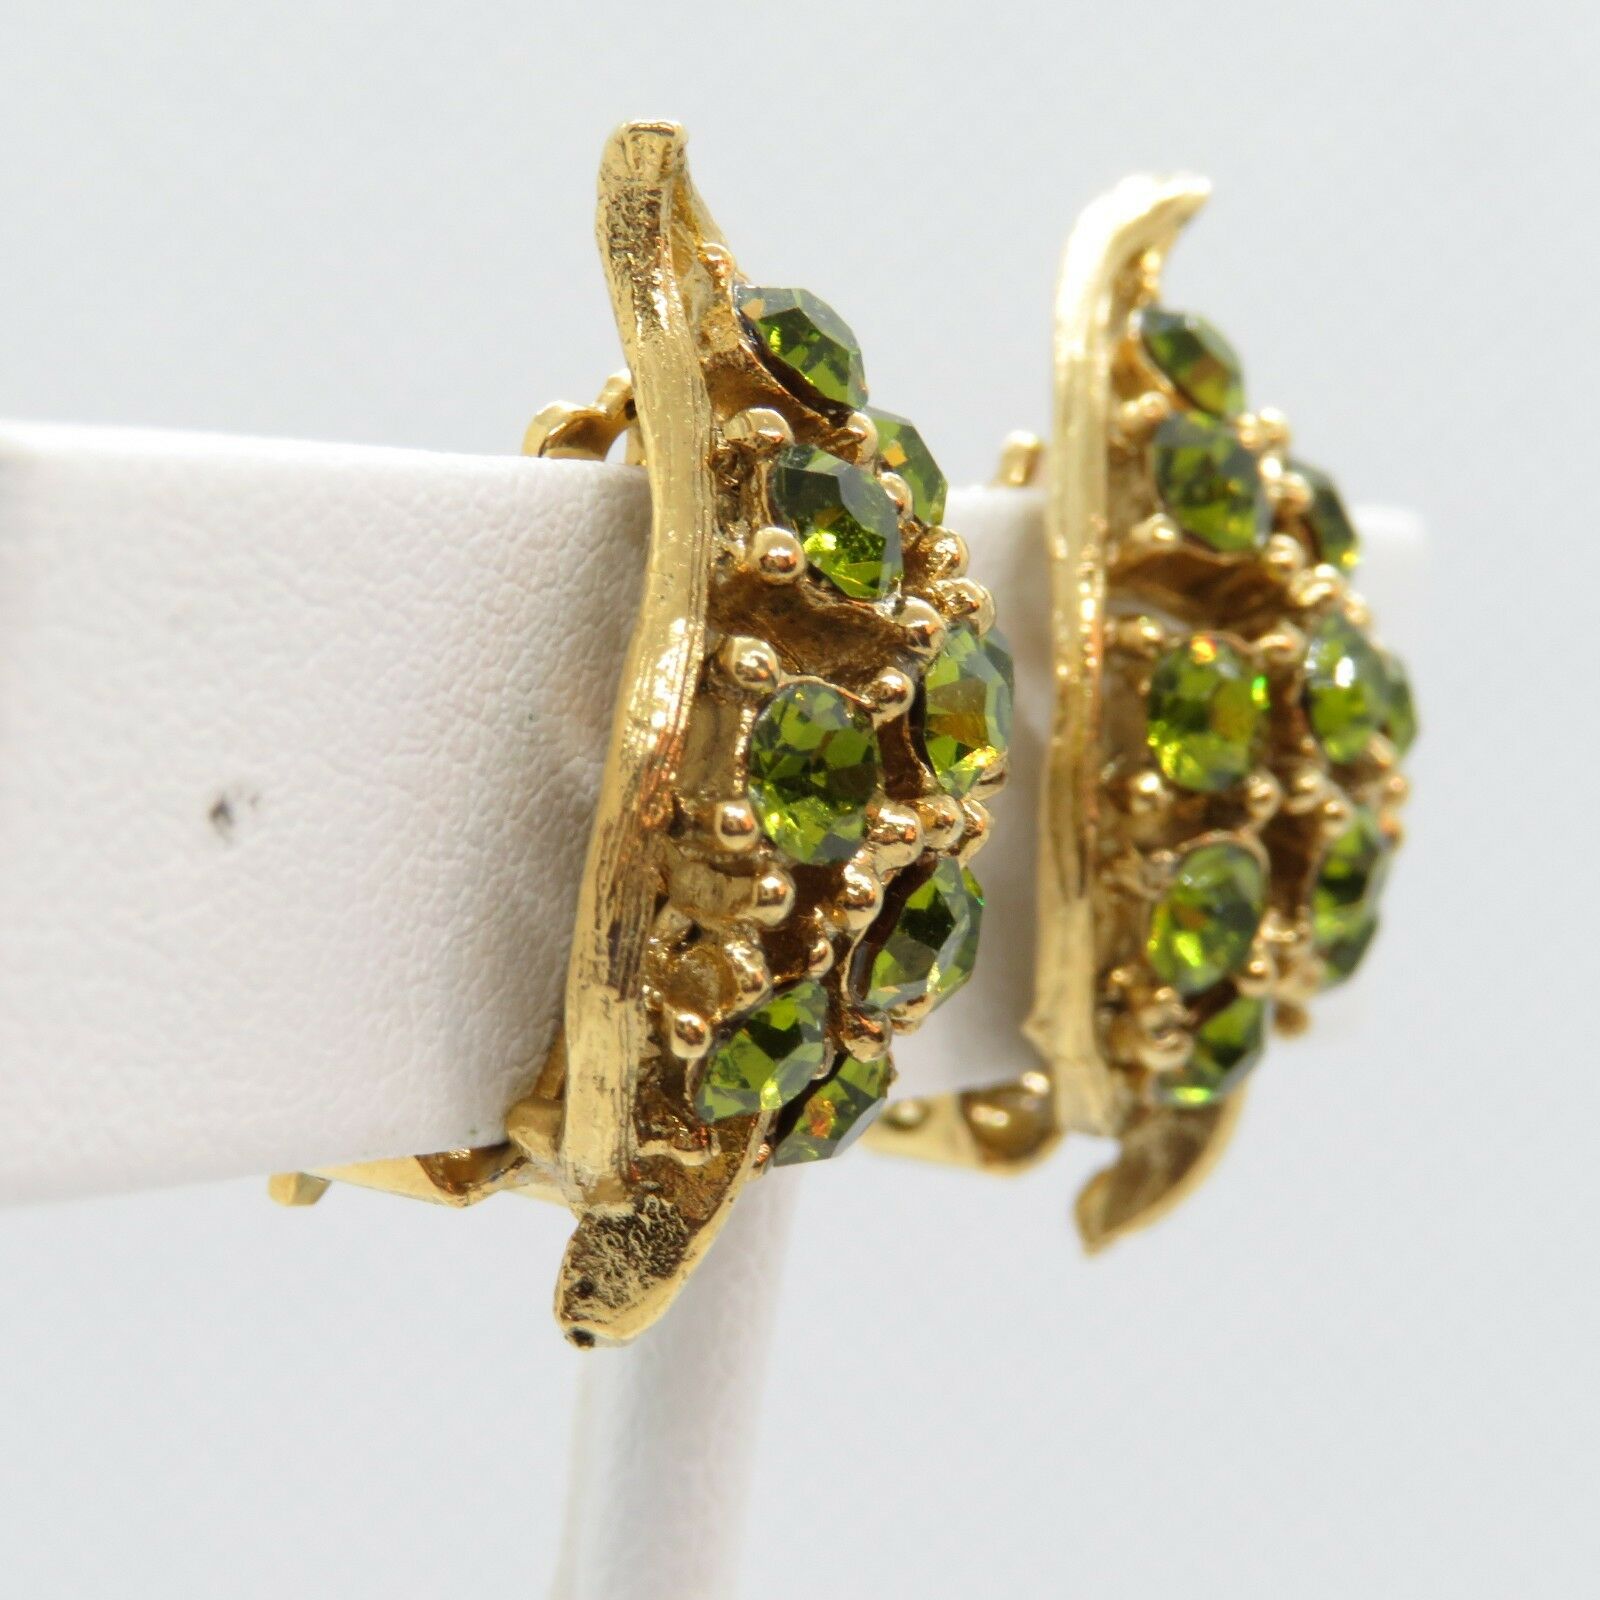 Vintage Rhinestone Clip Earrings Green Leaf Leave Gold Tone Fall Spring Costume Jewelry - At Grandma's Table